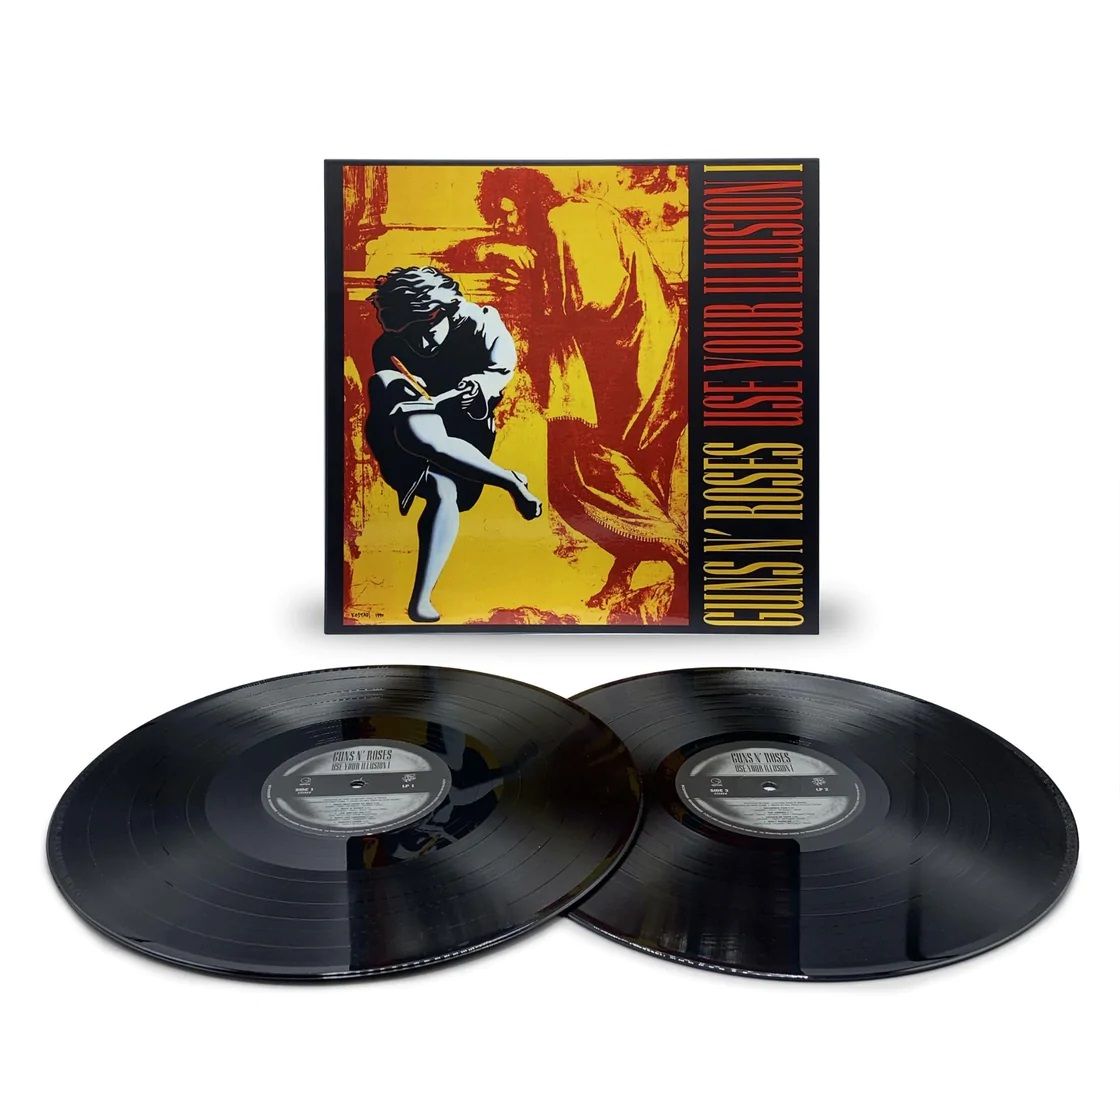 Guns N Roses - Use Your Illusion I (2022 180g 2LP remastered gatefold reissue) - Vinyl - New